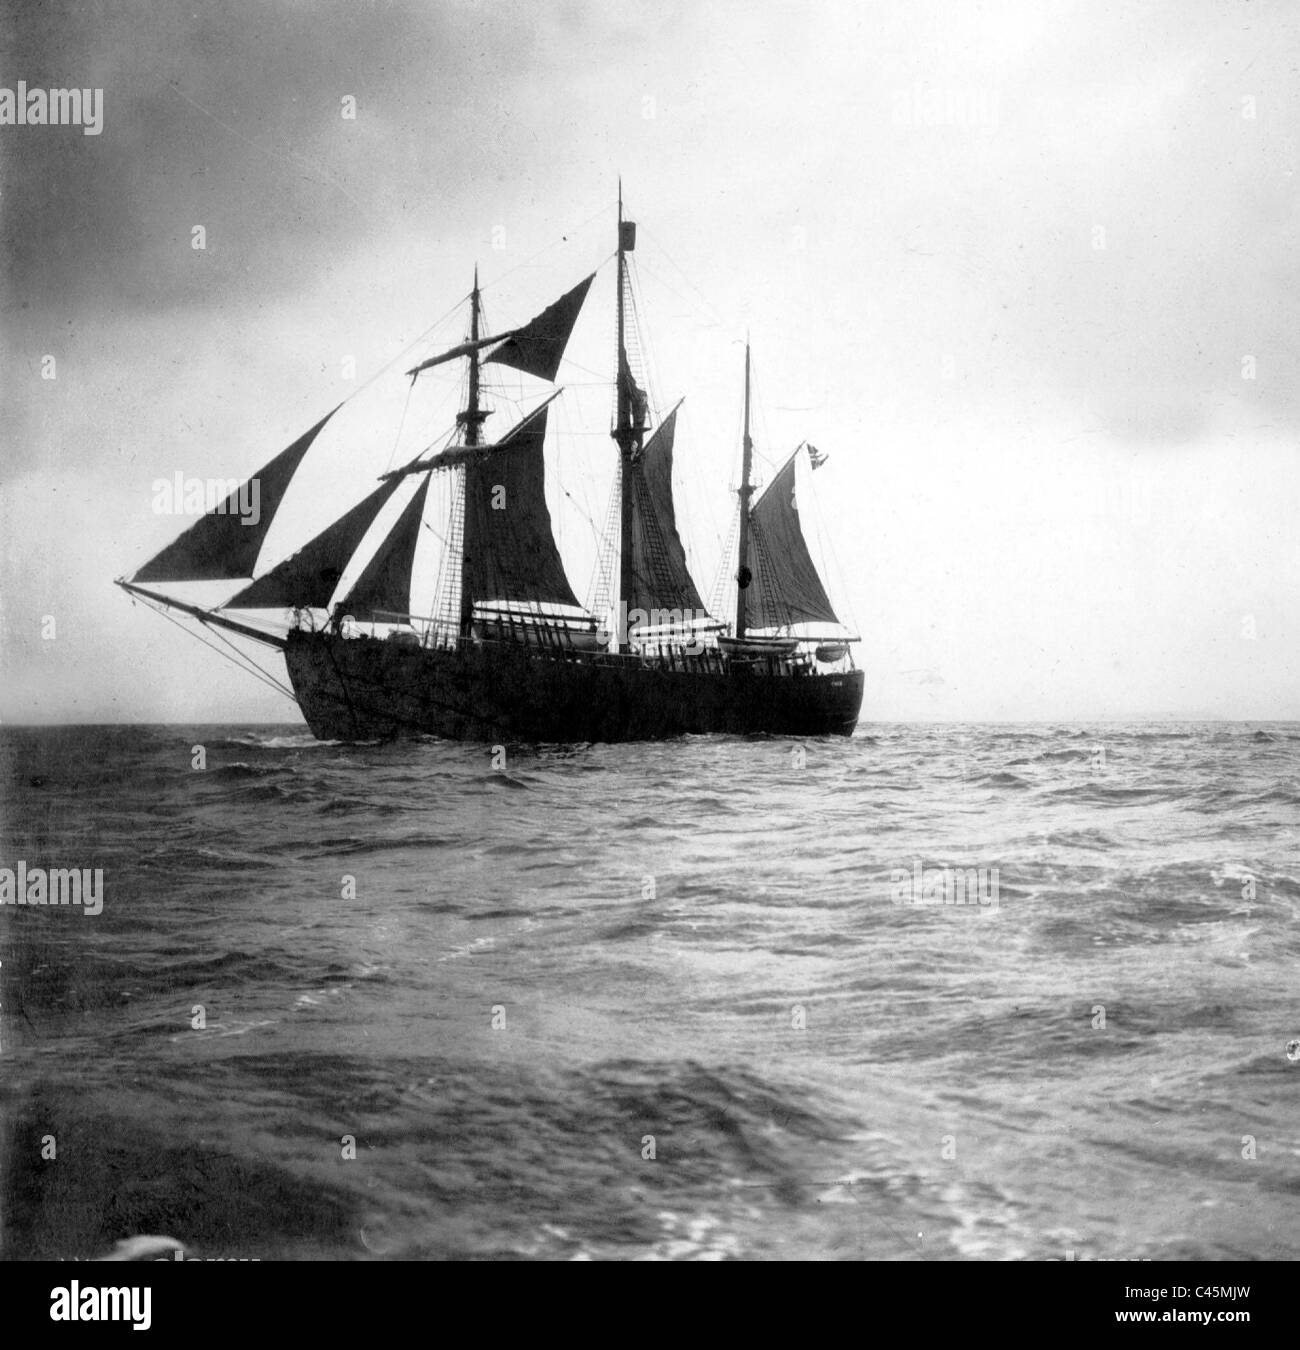 Fram polar ship hi-res stock photography and images - Alamy